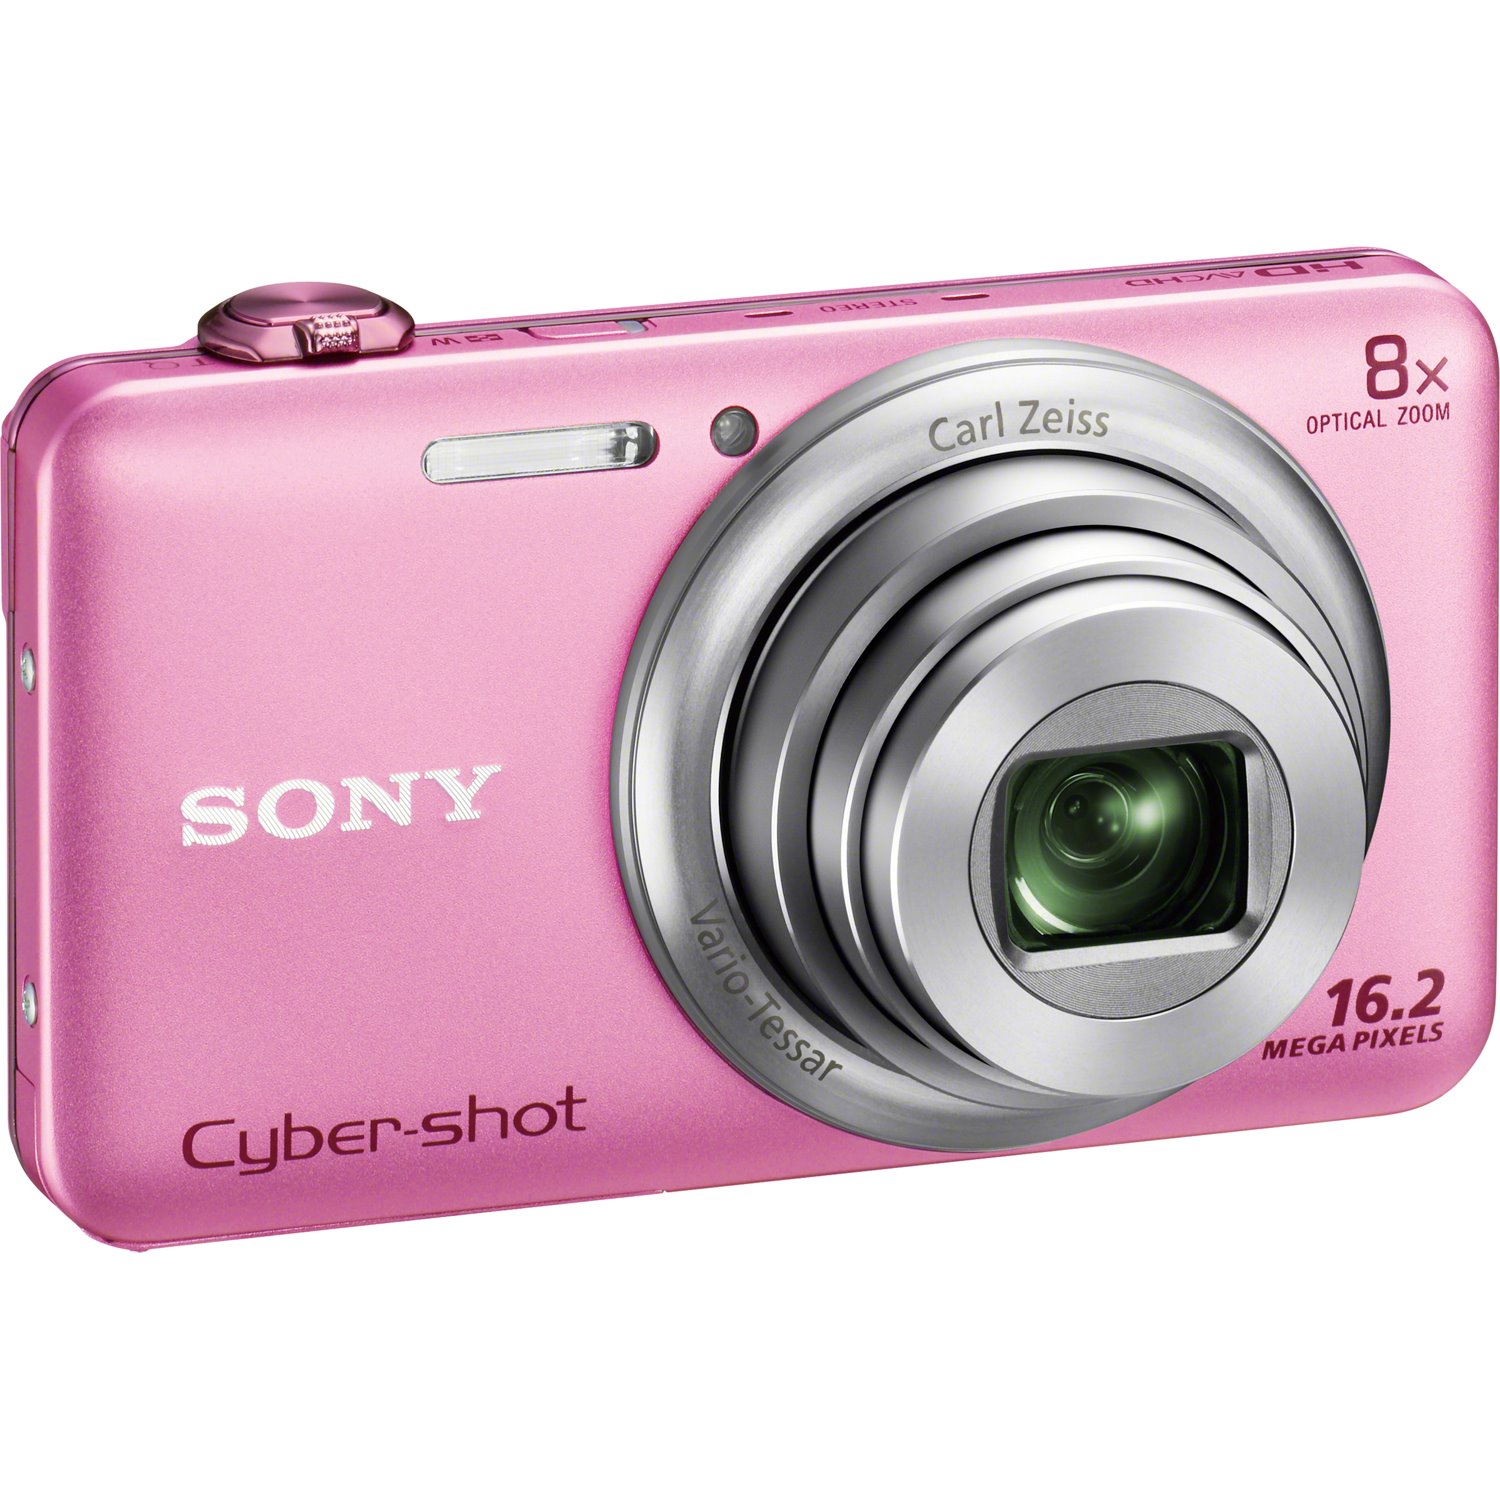 Sony Cyber-shot DSC-WX60 16.2 Megapixel Compact Camera - Pink